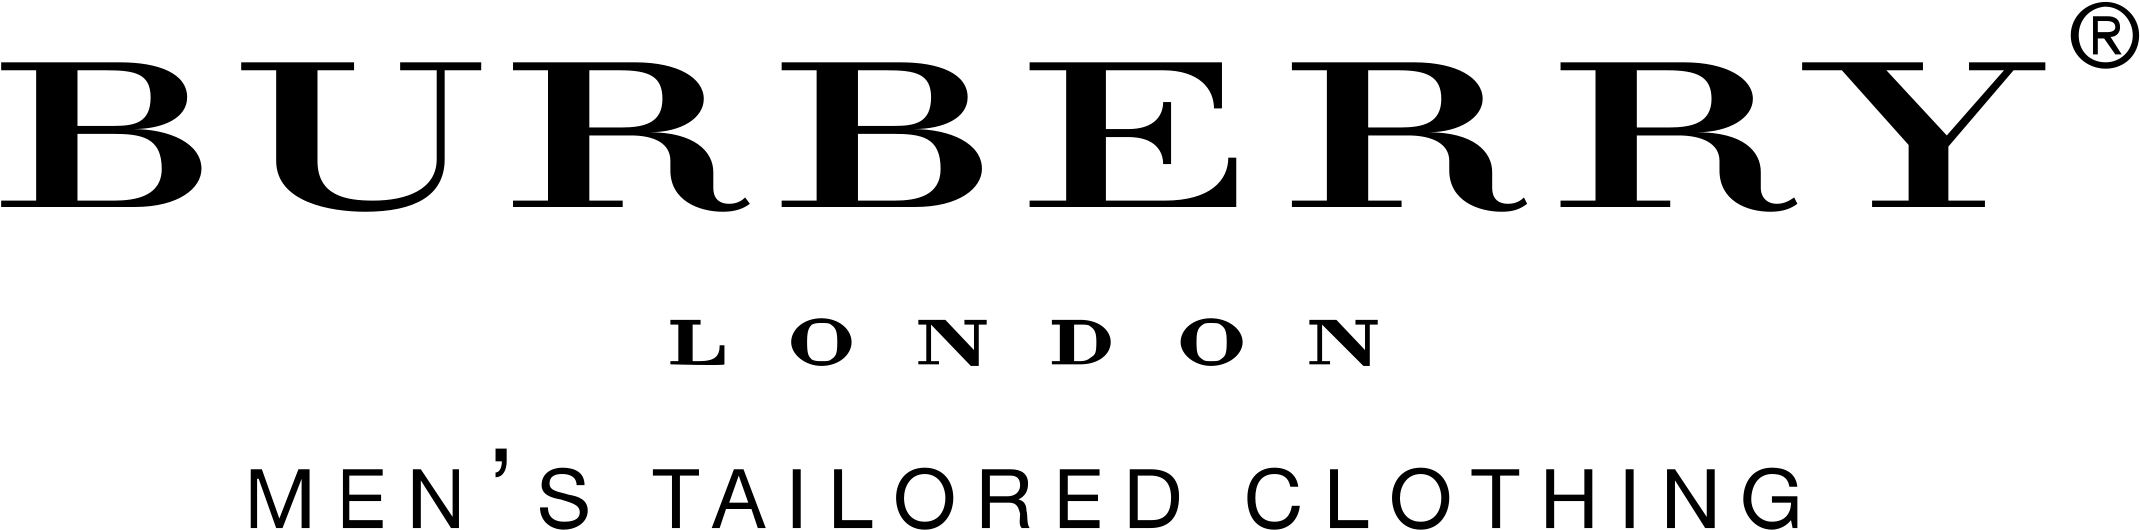 Burberry Logo PNG High-Quality Image